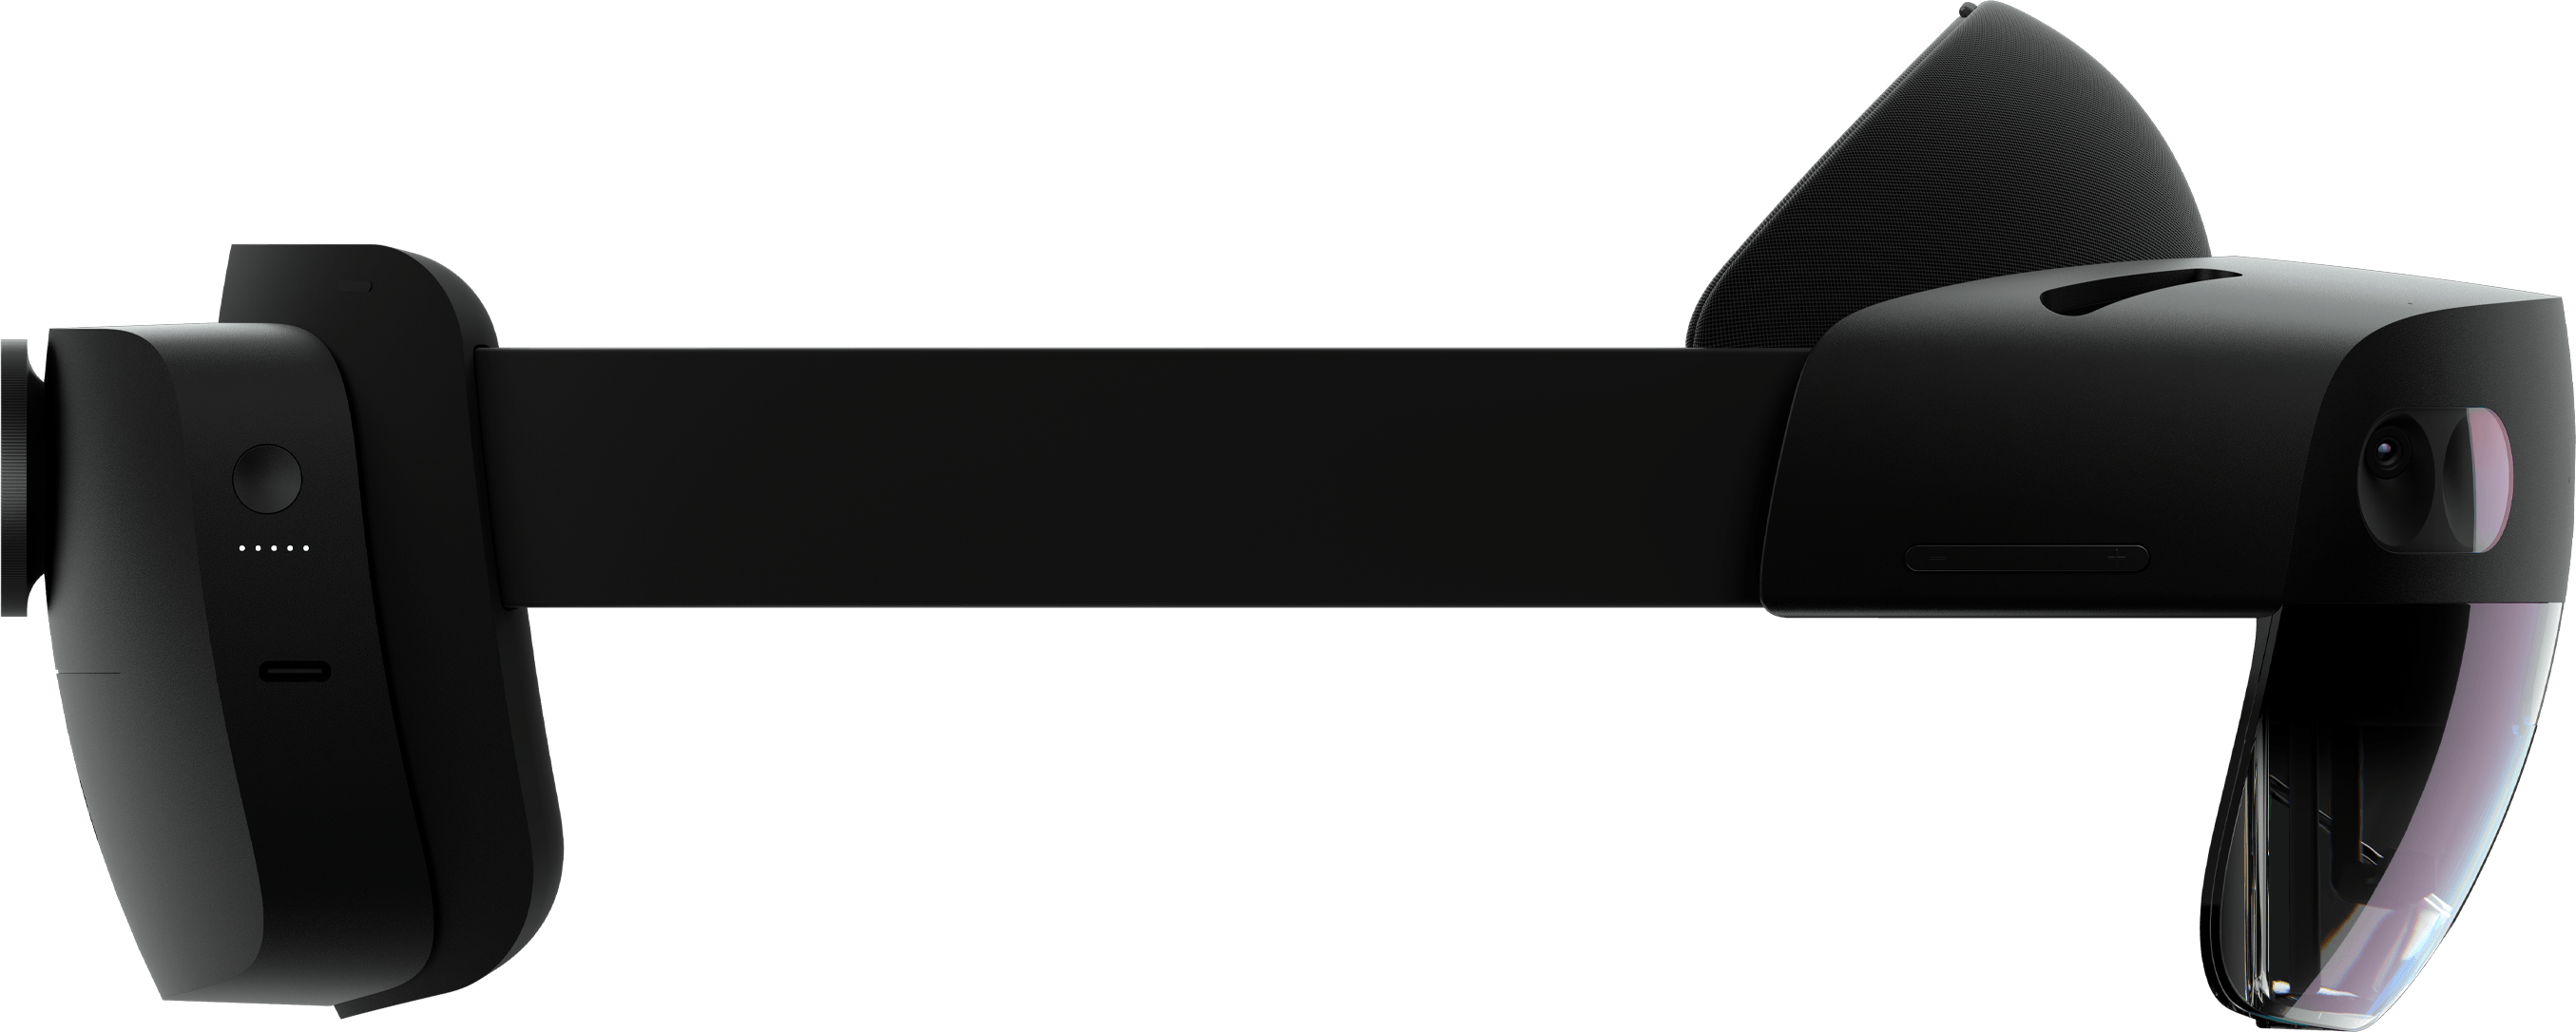 Microsoft HoloLens 2 | Channel XR